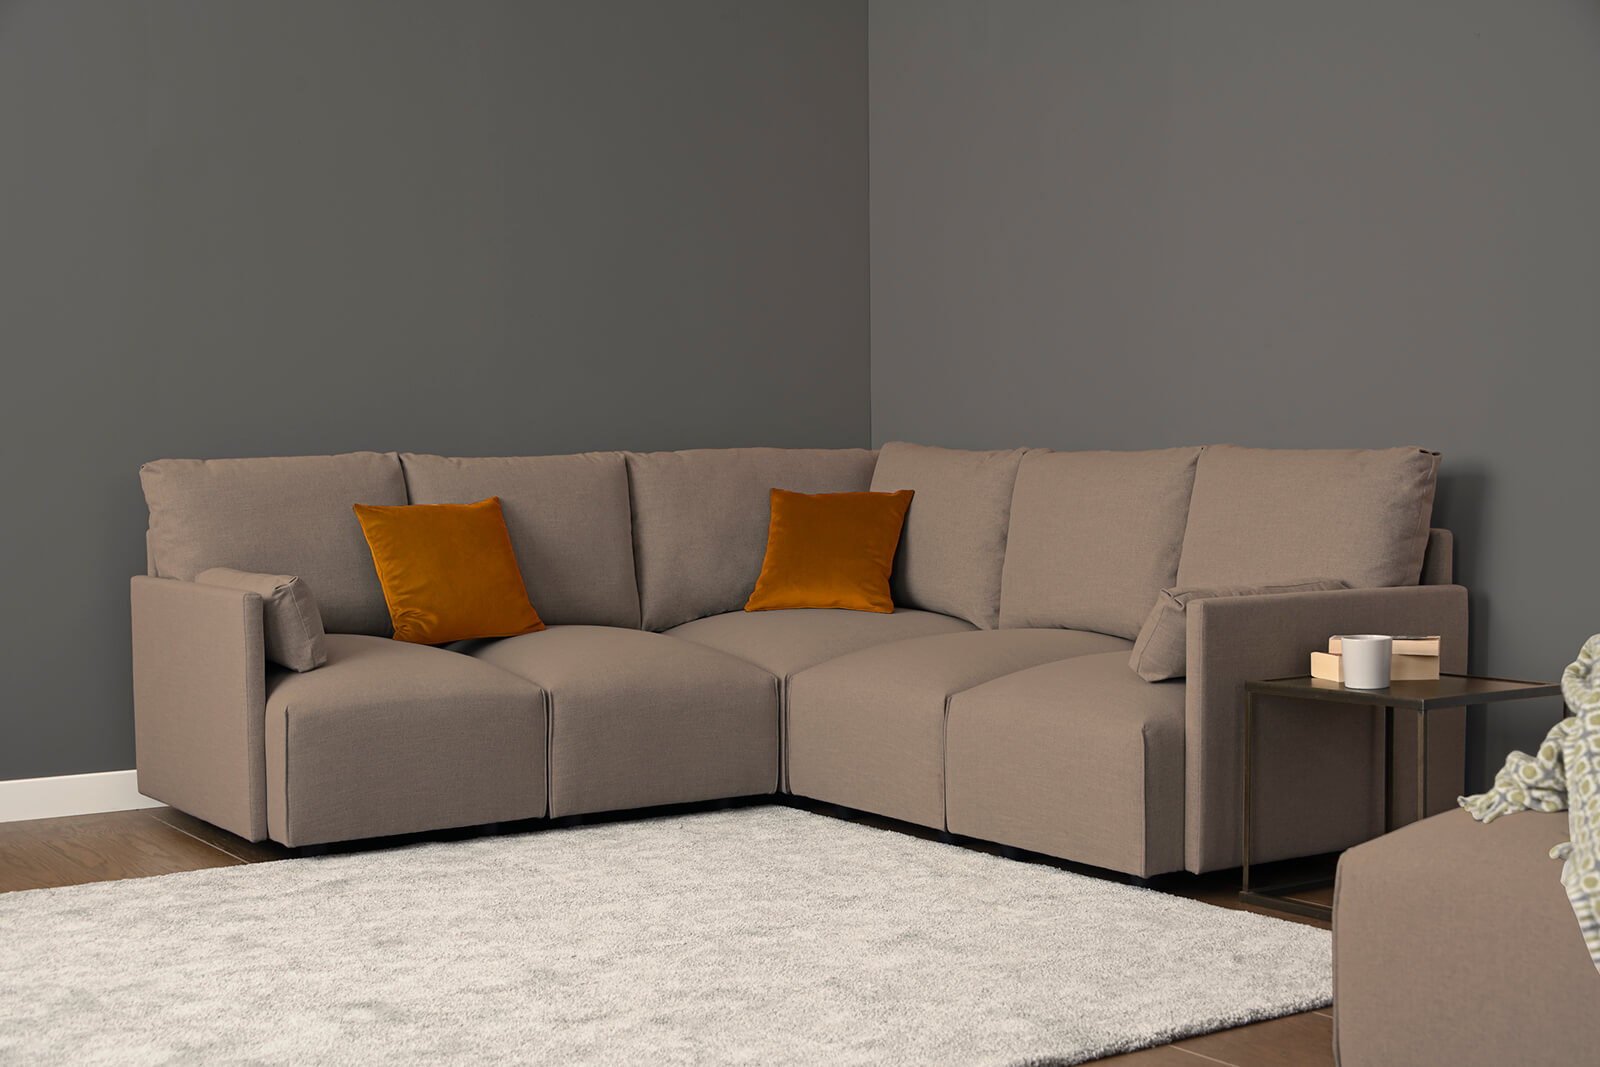 HB04-medium-corner-sofa-3q-husk-3x3-lifestyle